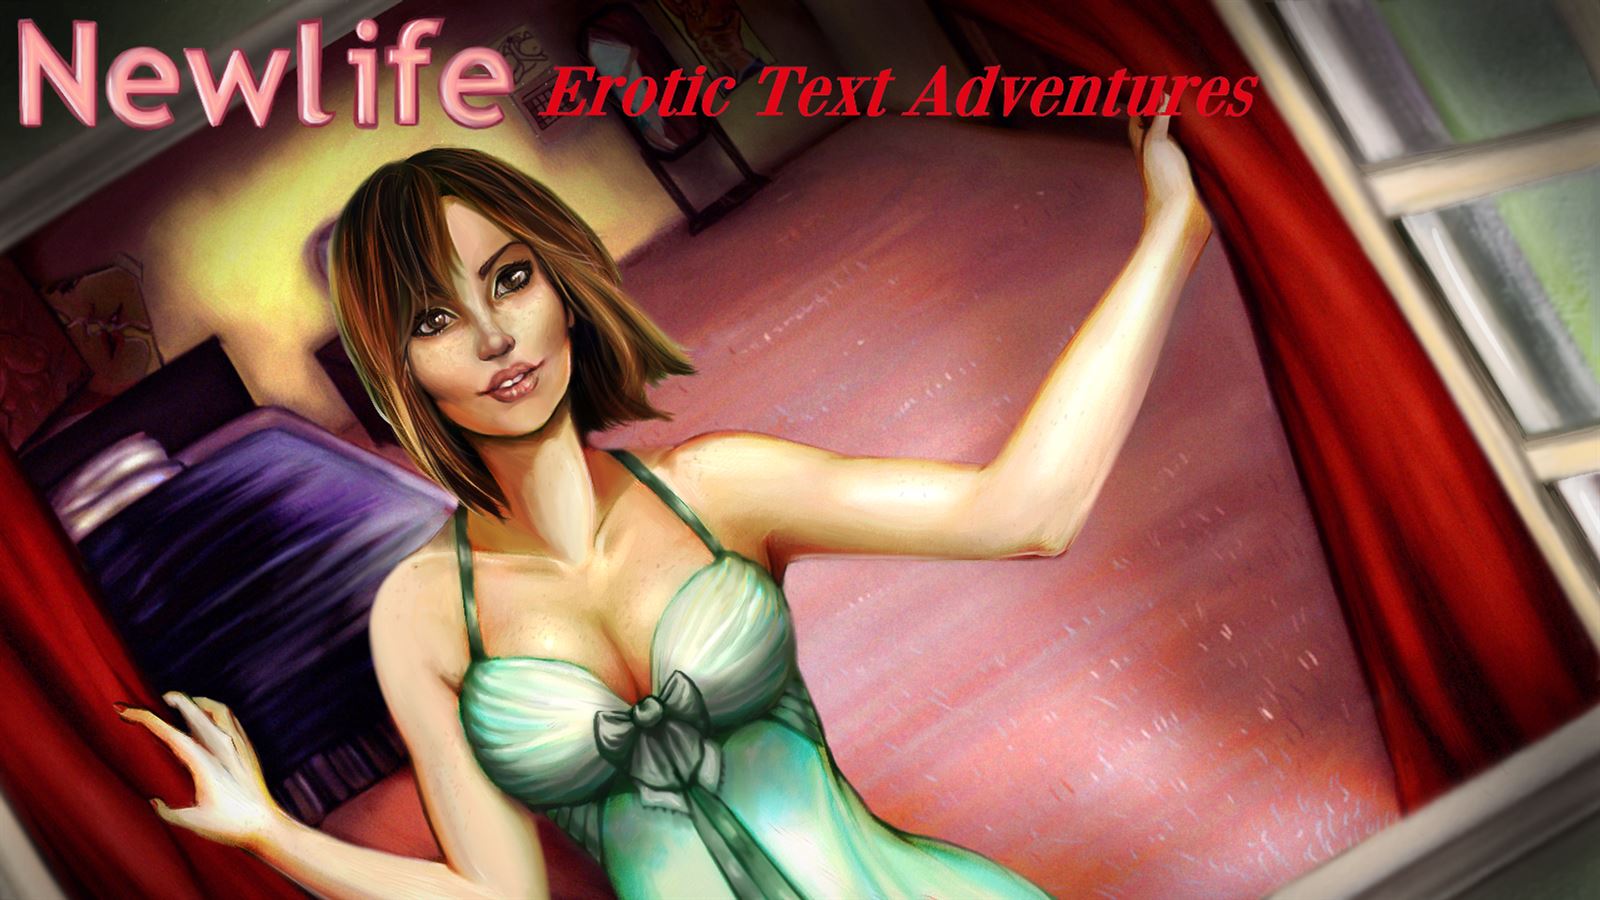 HTML] Newlife - v0.8.1 by Splendid Ostrich 18+ Adult xxx Porn Game Download